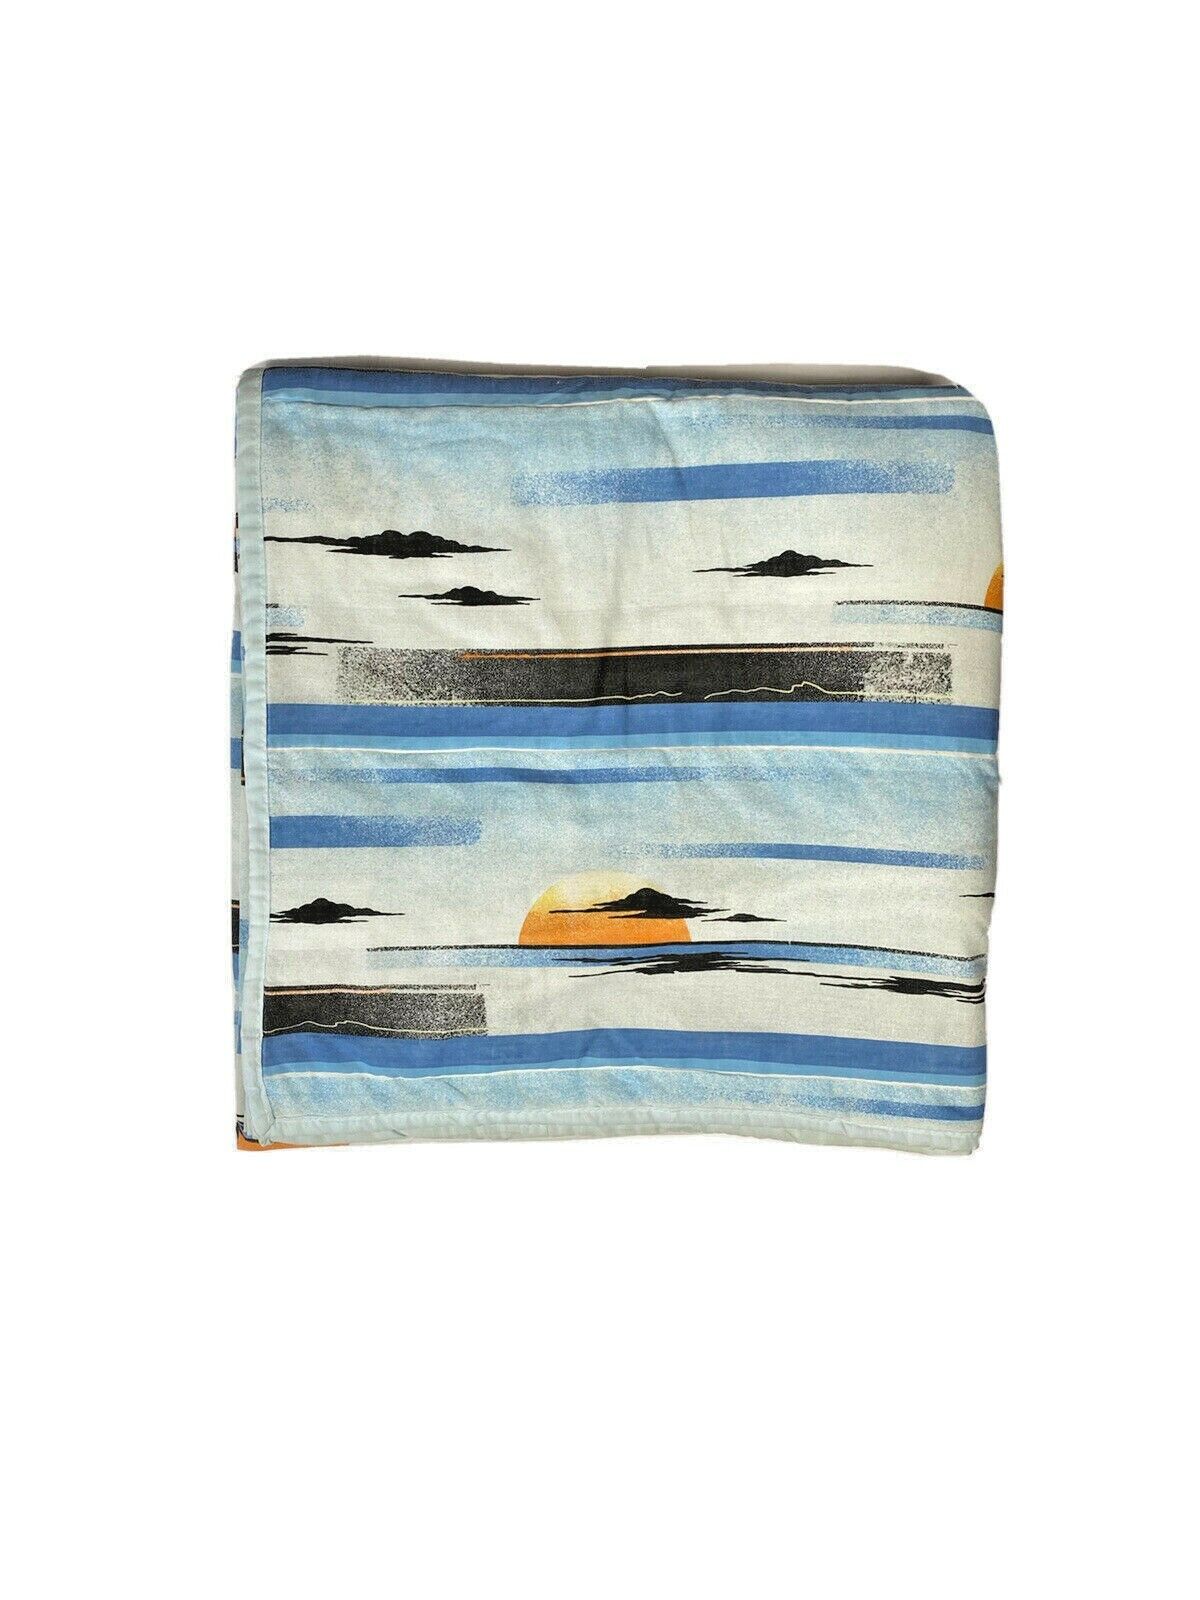 Vintage Southwestern Comforter Bedding Throw Blanket Quilt 70s Retro Blue Orange